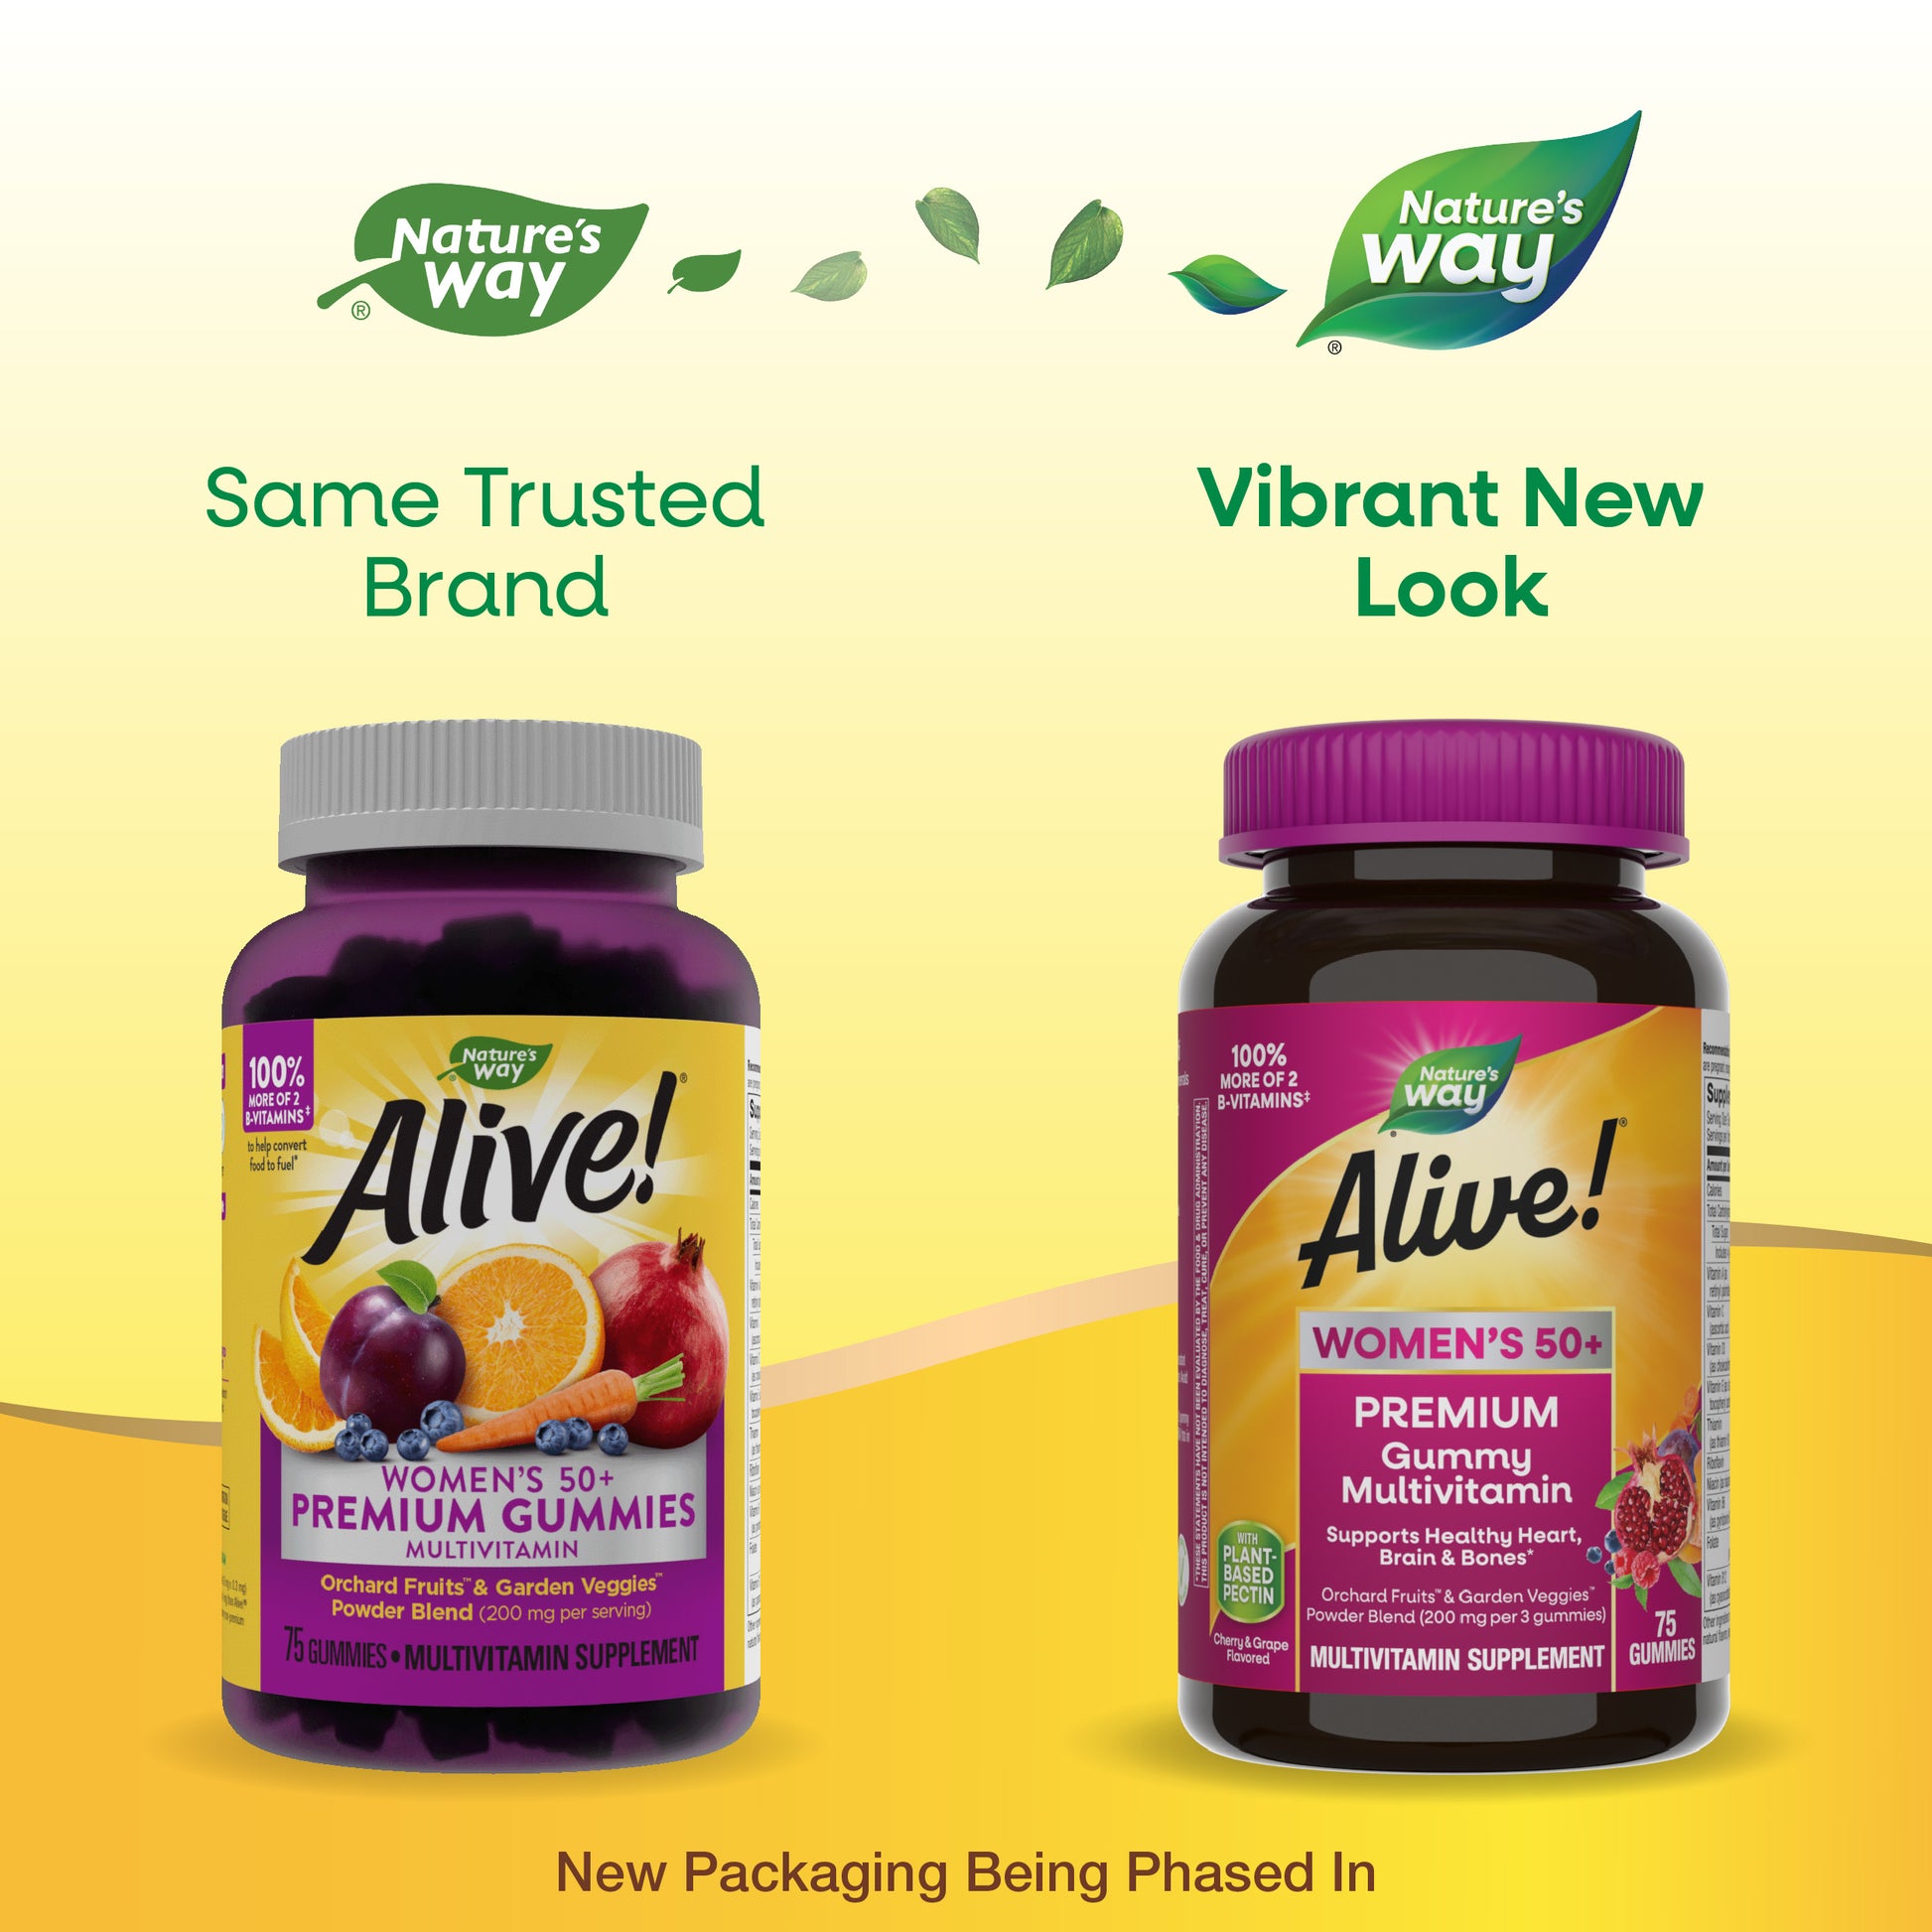 Nature's Way® | Alive!® Premium Women's 50+ Gummy Multivitamin